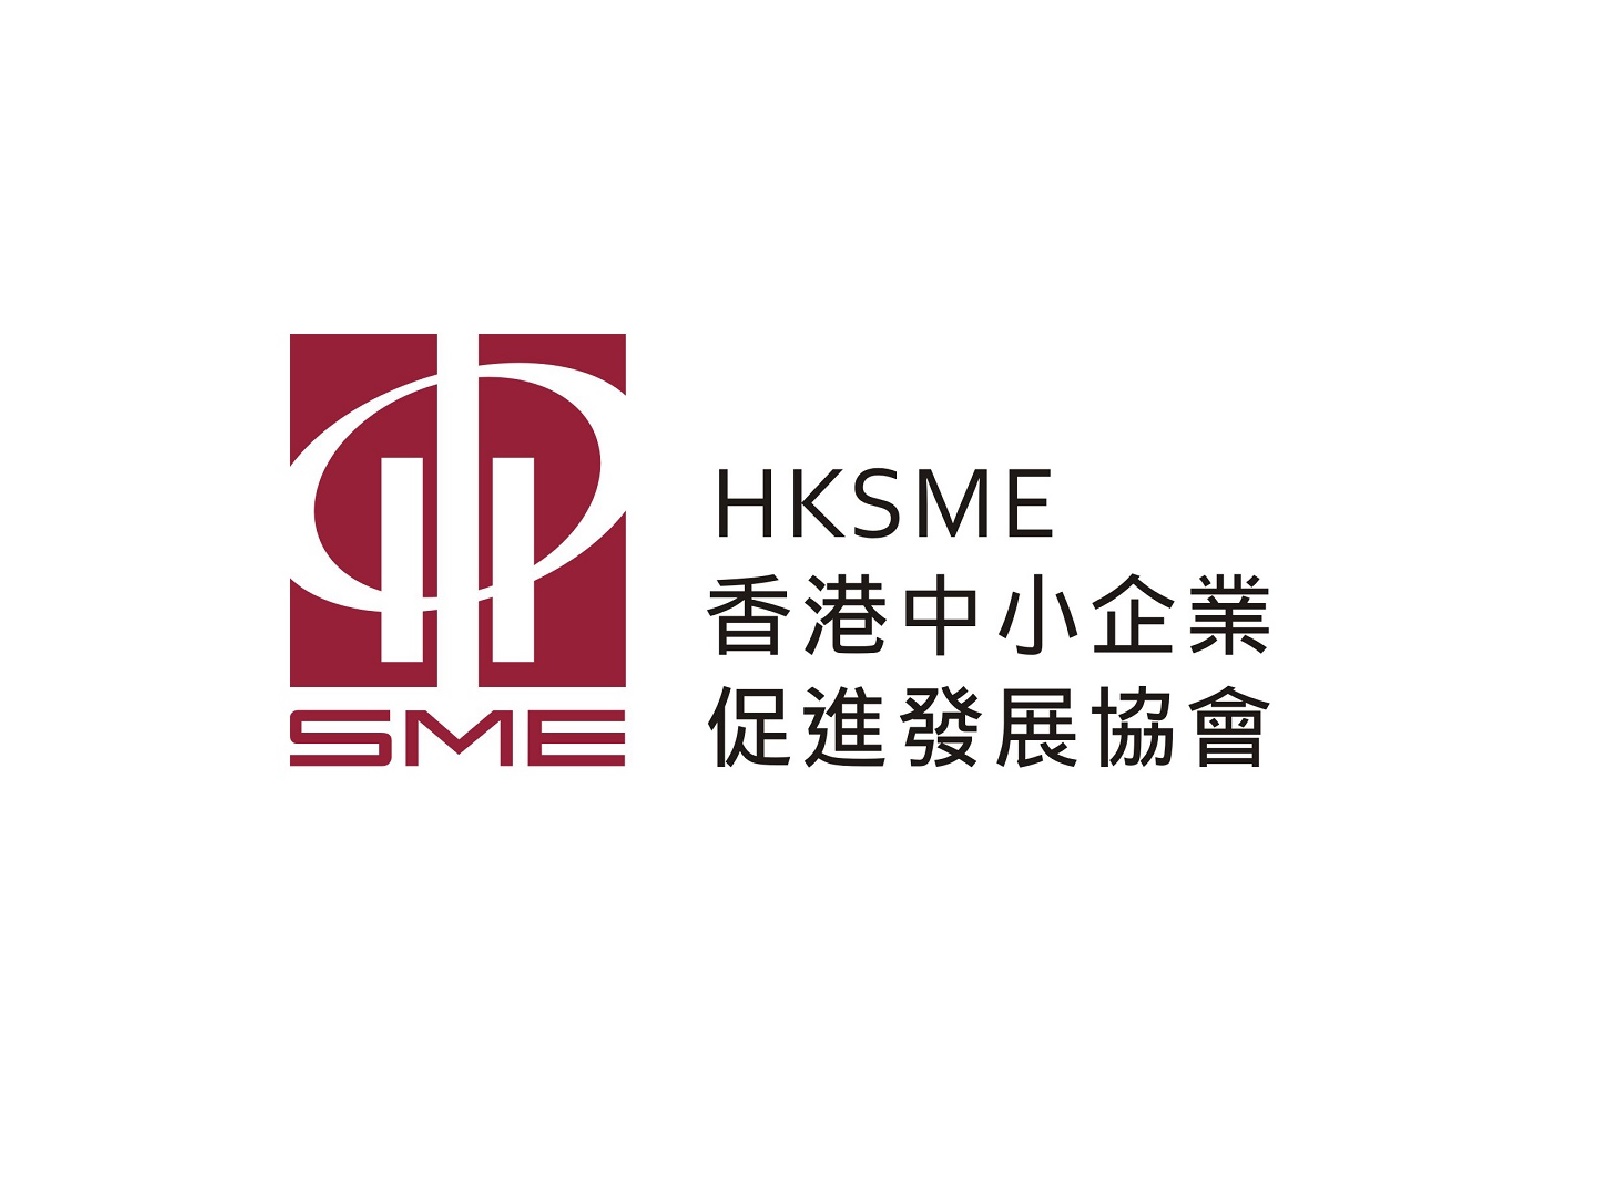 Hong Kong Association for Promotion & Development of SMEs